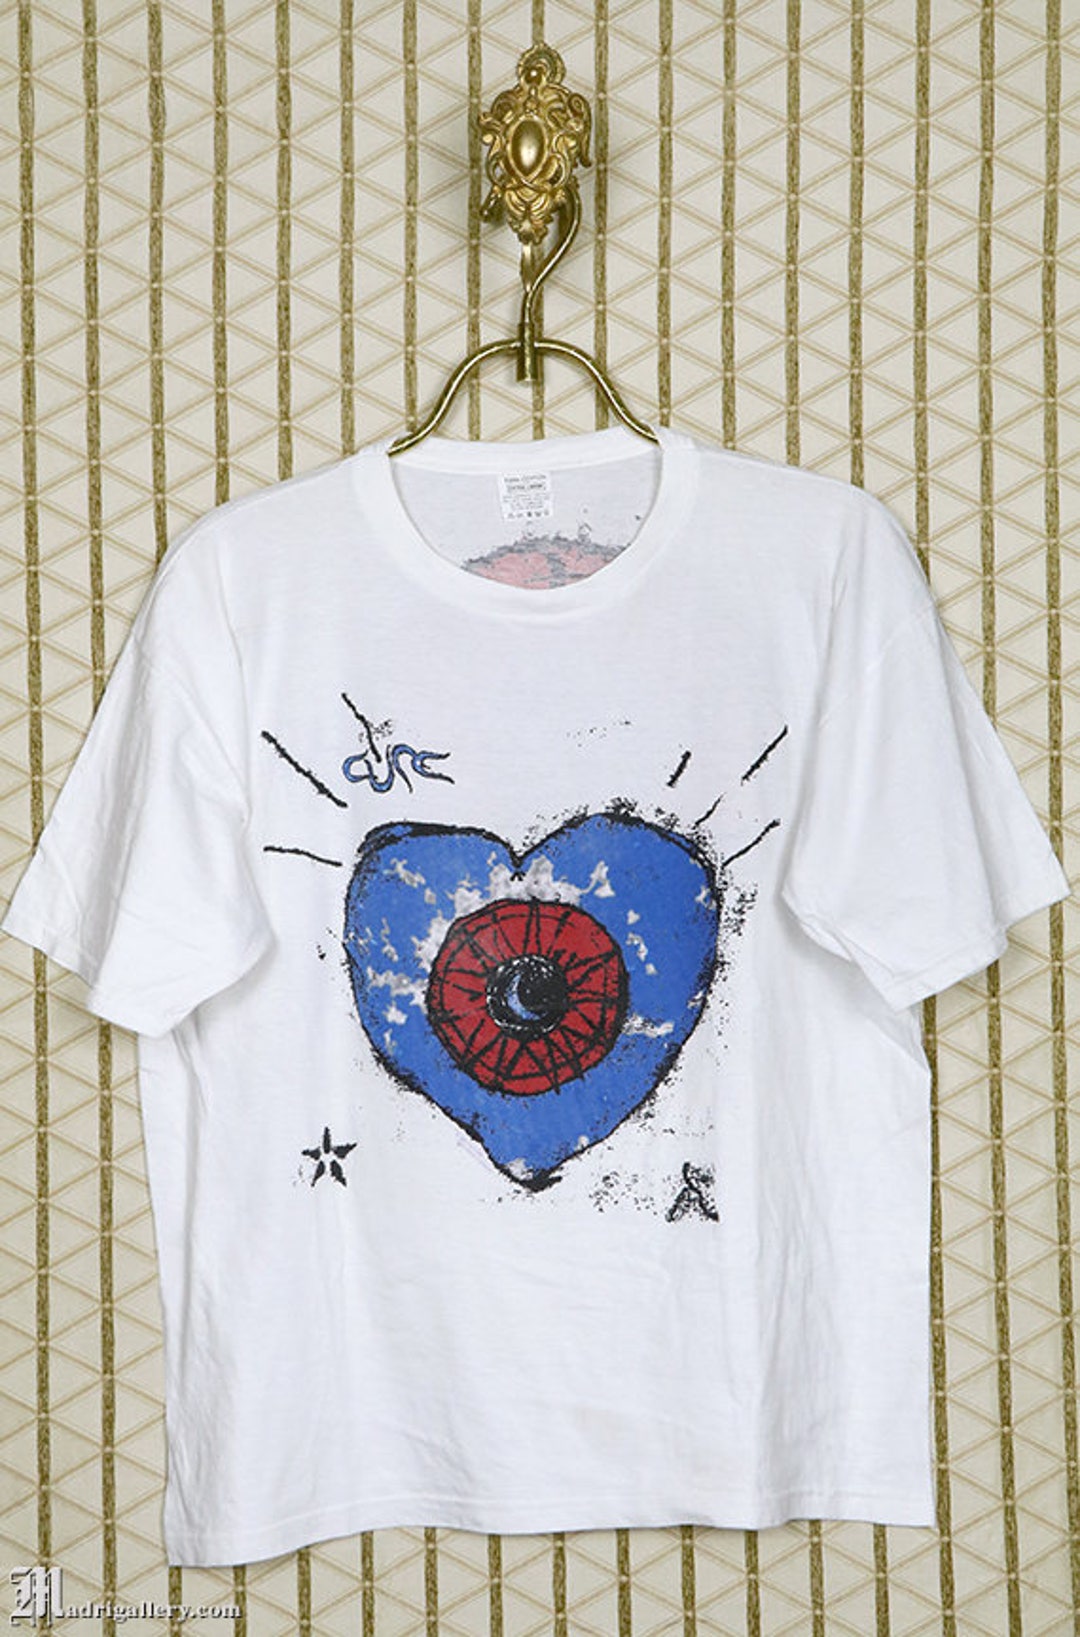 The Cure 1992 Wish Tour Shirt Vintage Rare T-shirt White - Etsy